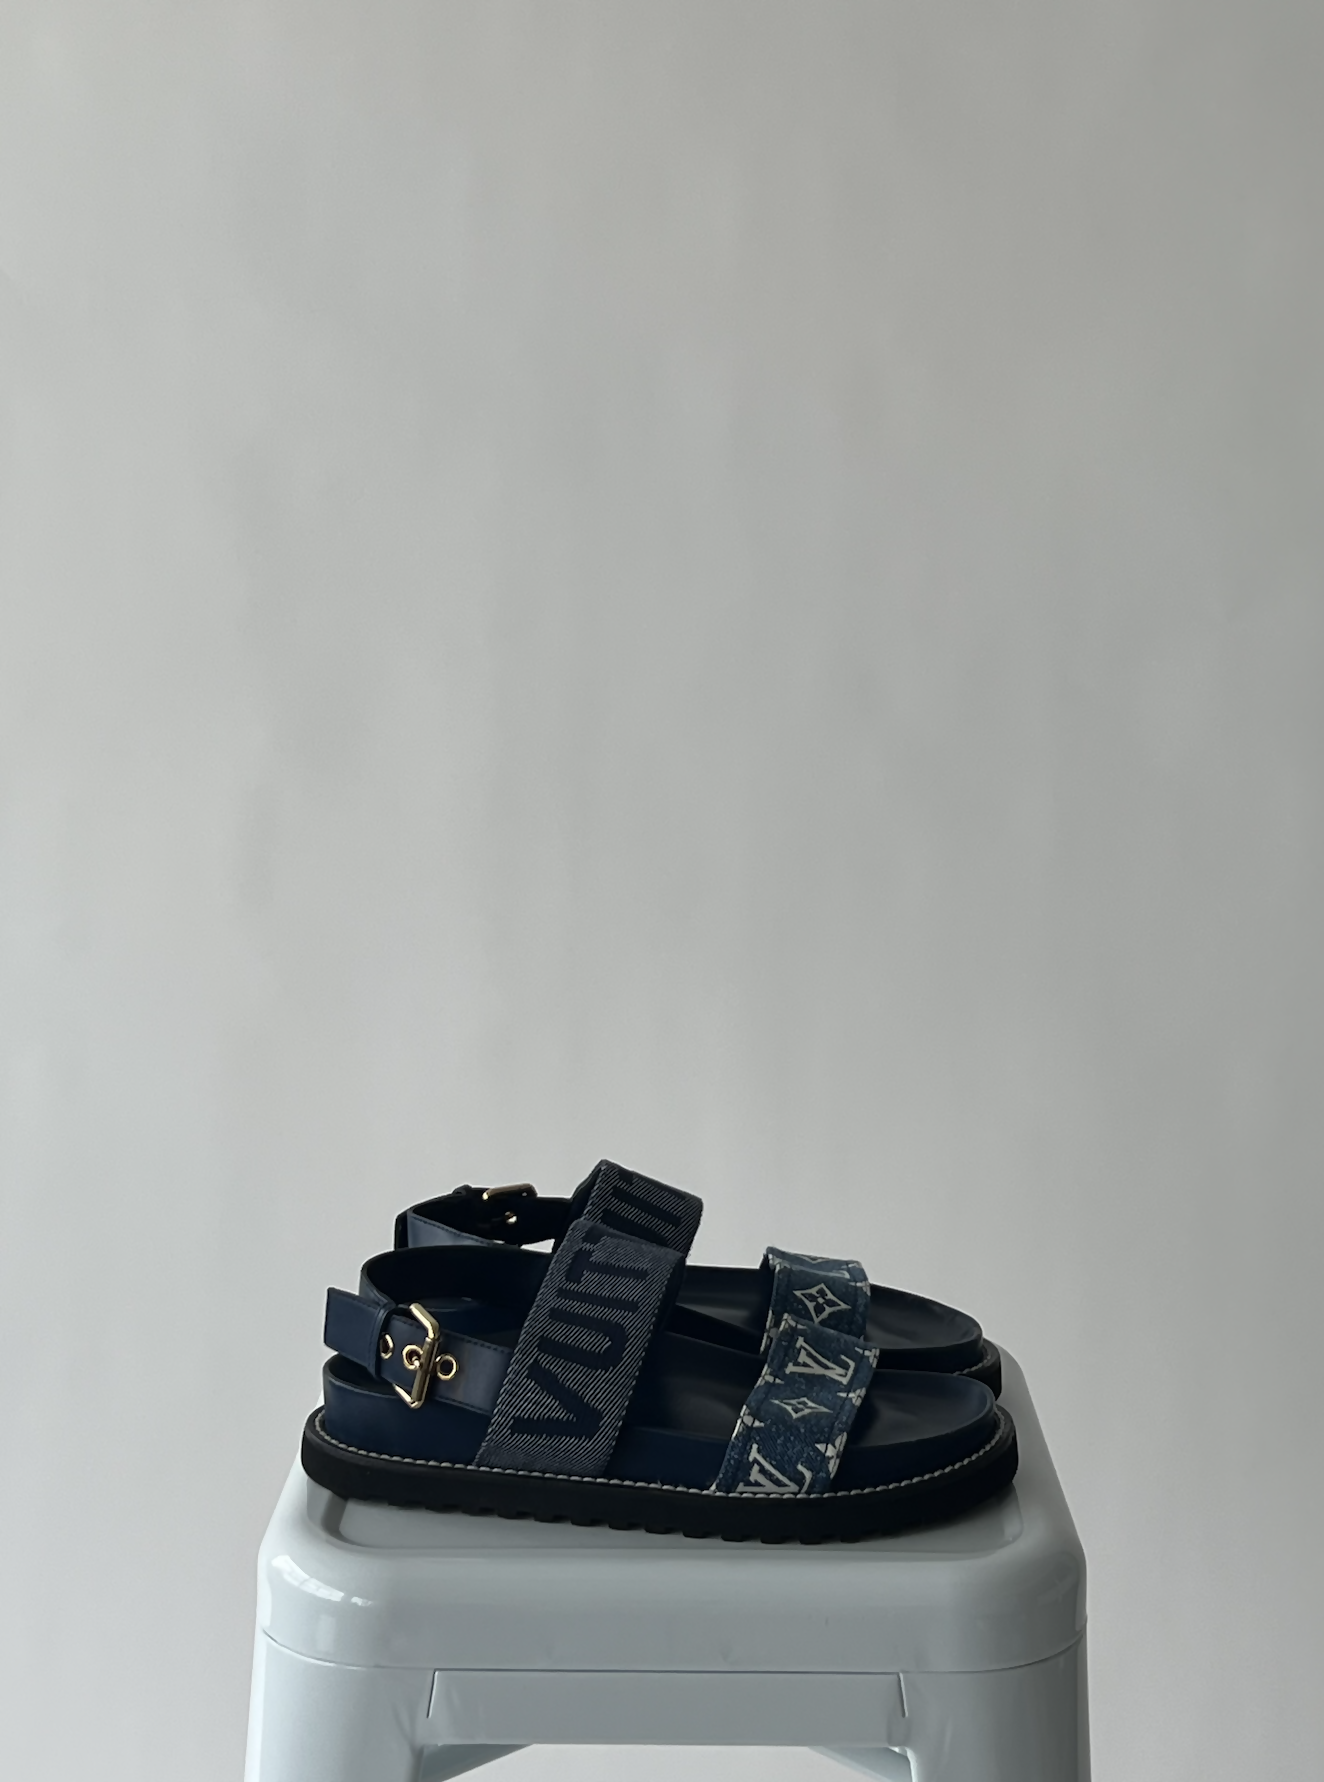 Louis Vuitton Paseo Flat Comfort Sandals - Full set